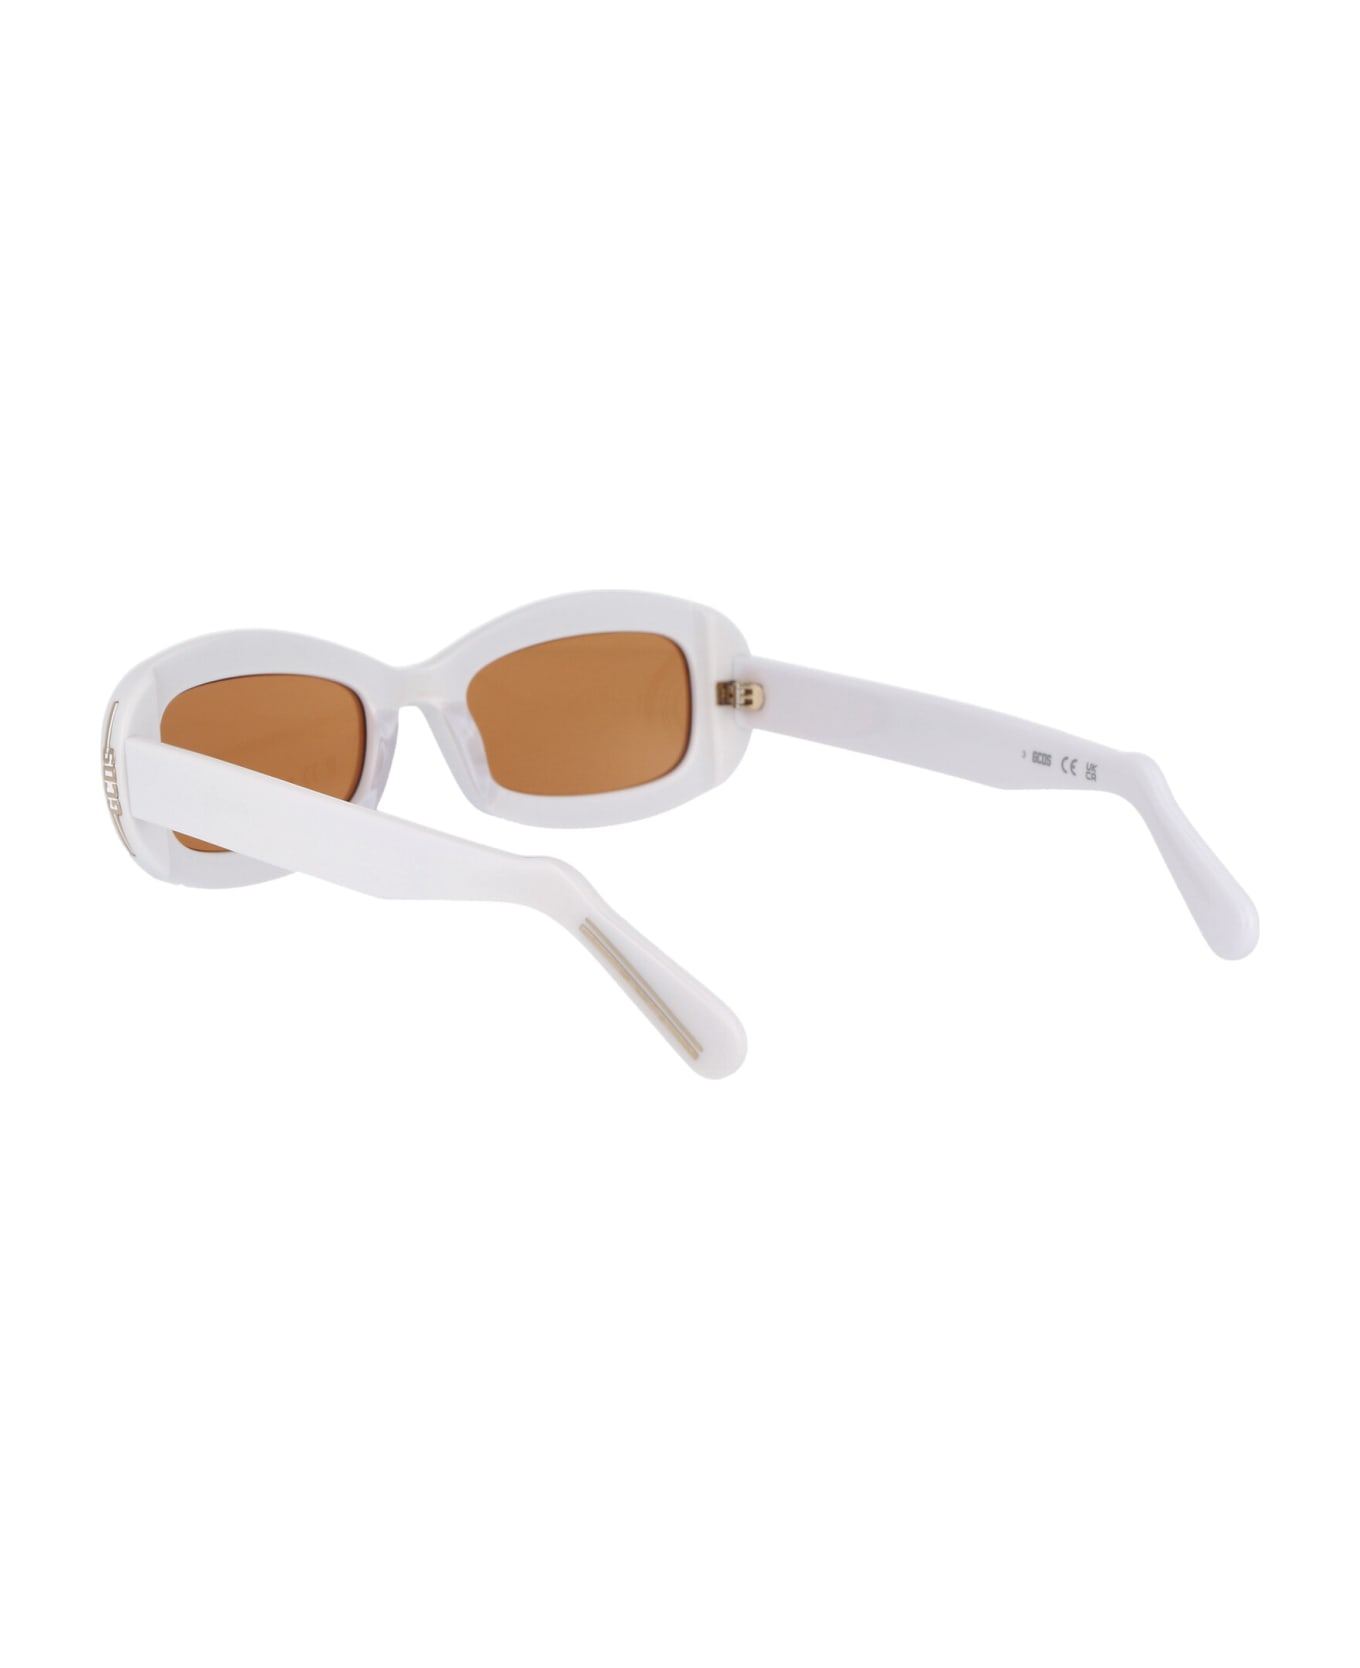 GCDS Gd0027 Sunglasses - 21E Bianco/Marrone